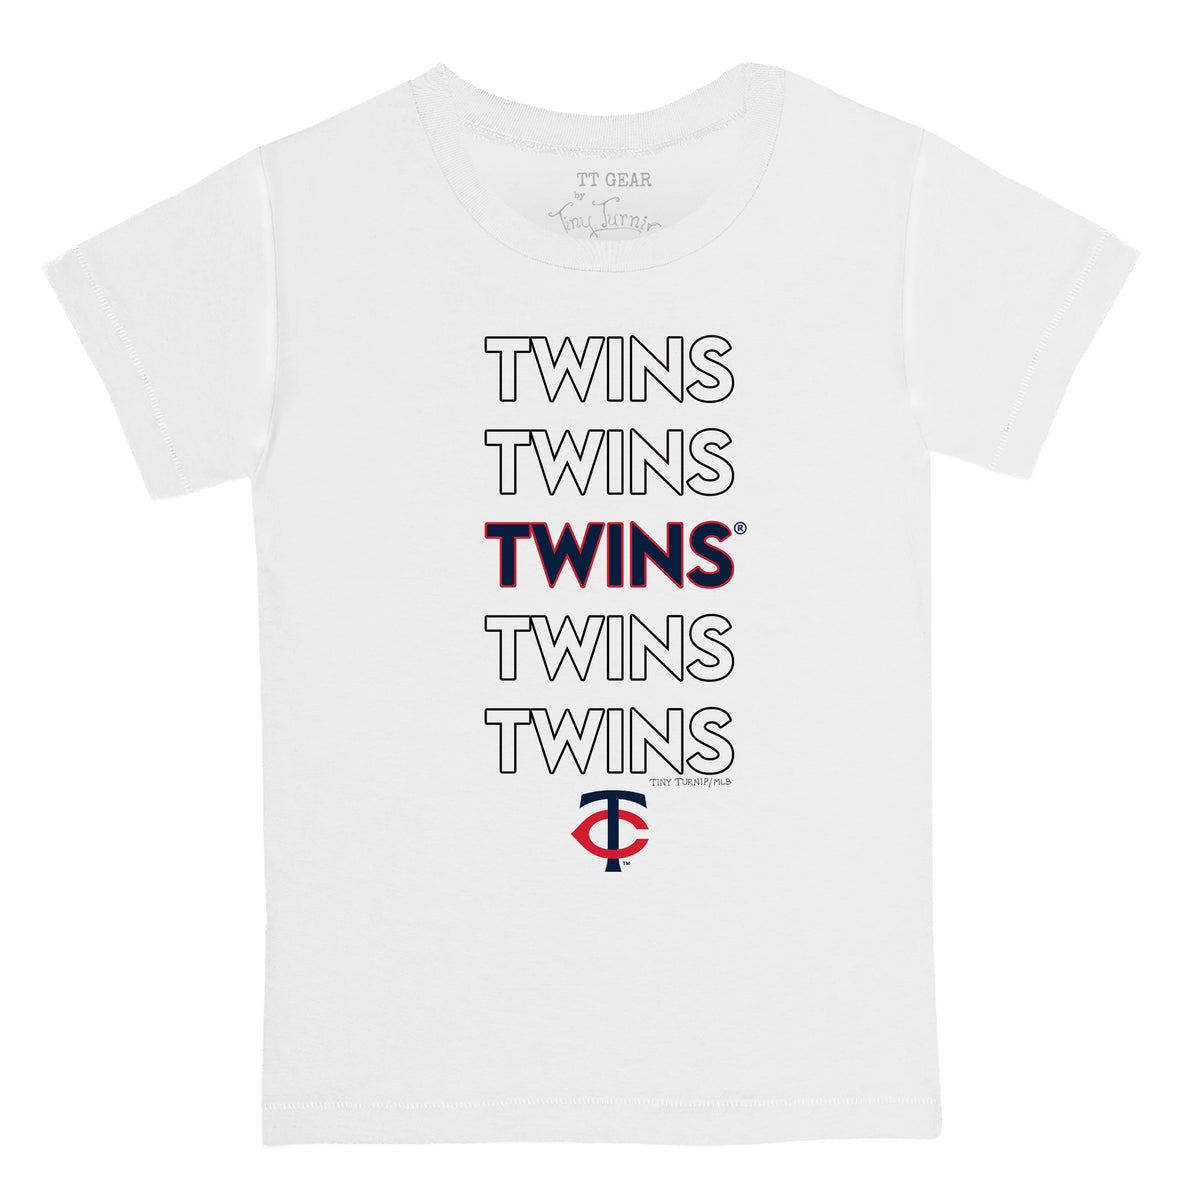 Nice chicago Cubs Tiny Turnip Youth Shark Logo 2023 T-Shirt